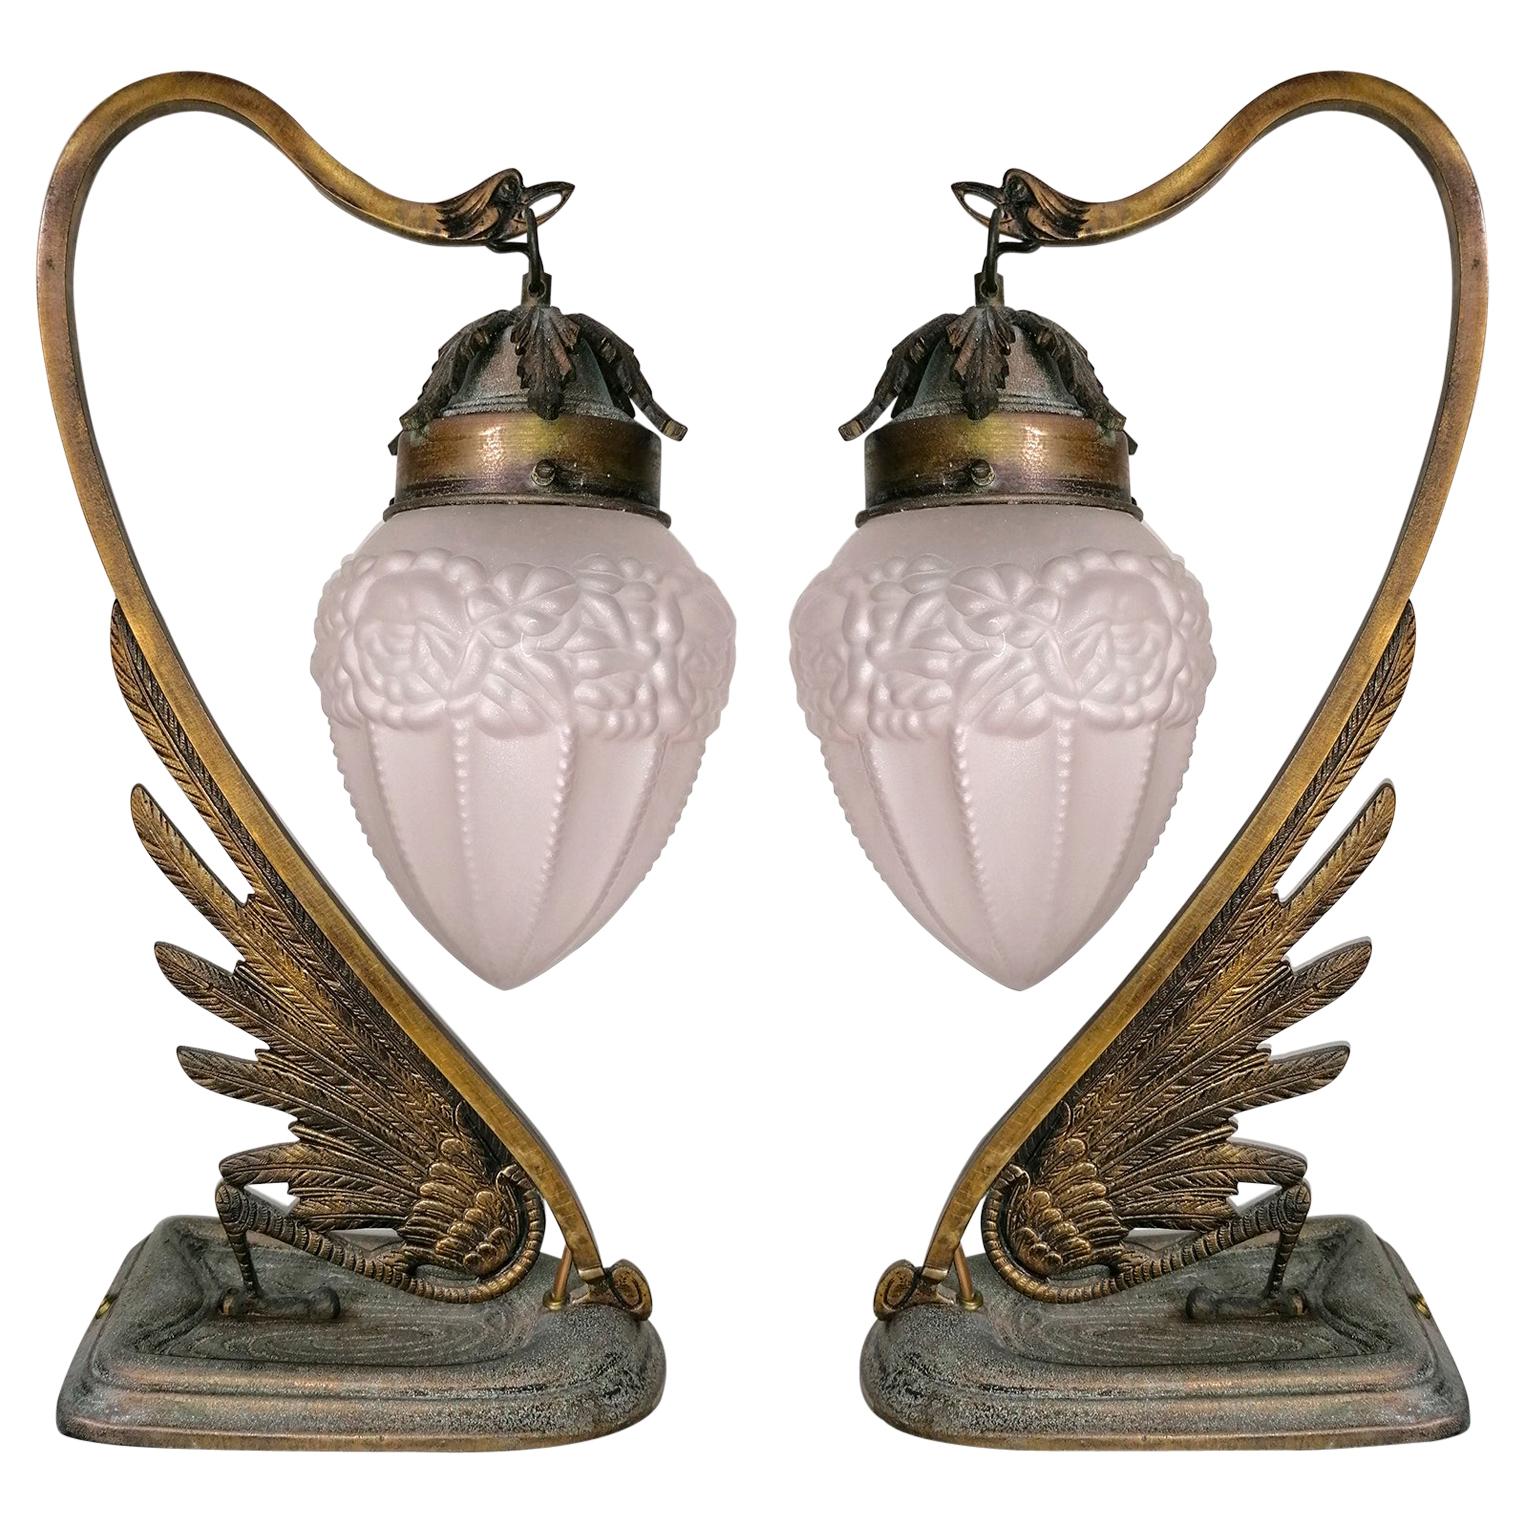 Pair of French Art Deco & Art Nouveau Ornate Bronze, Glass Flower Table Lamps